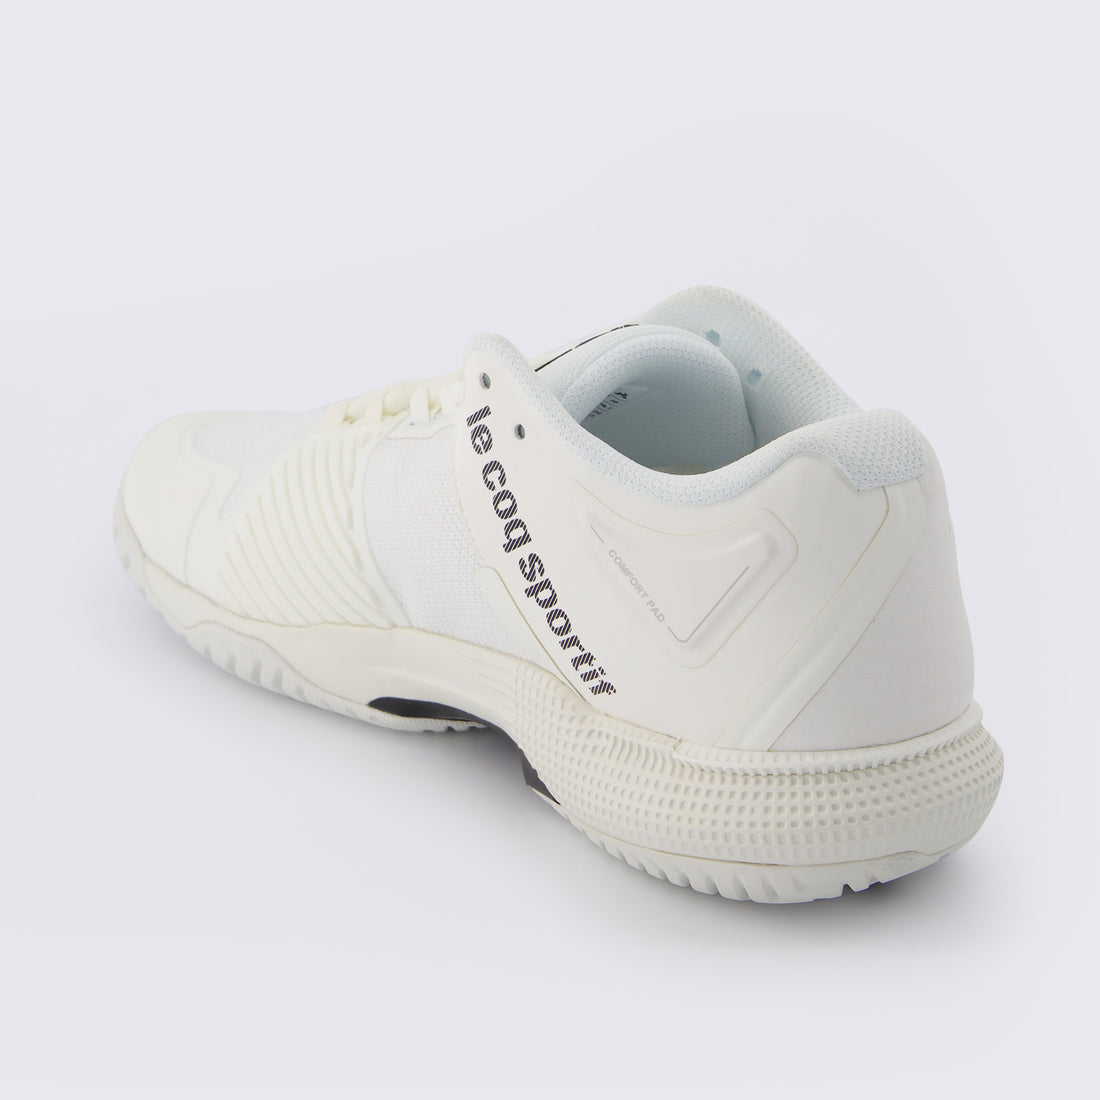 2210976-FUTUR LCS T01 ALL COURT bright white | Chaussures de tennis FUTUR T01 ALL COURT Unisexe